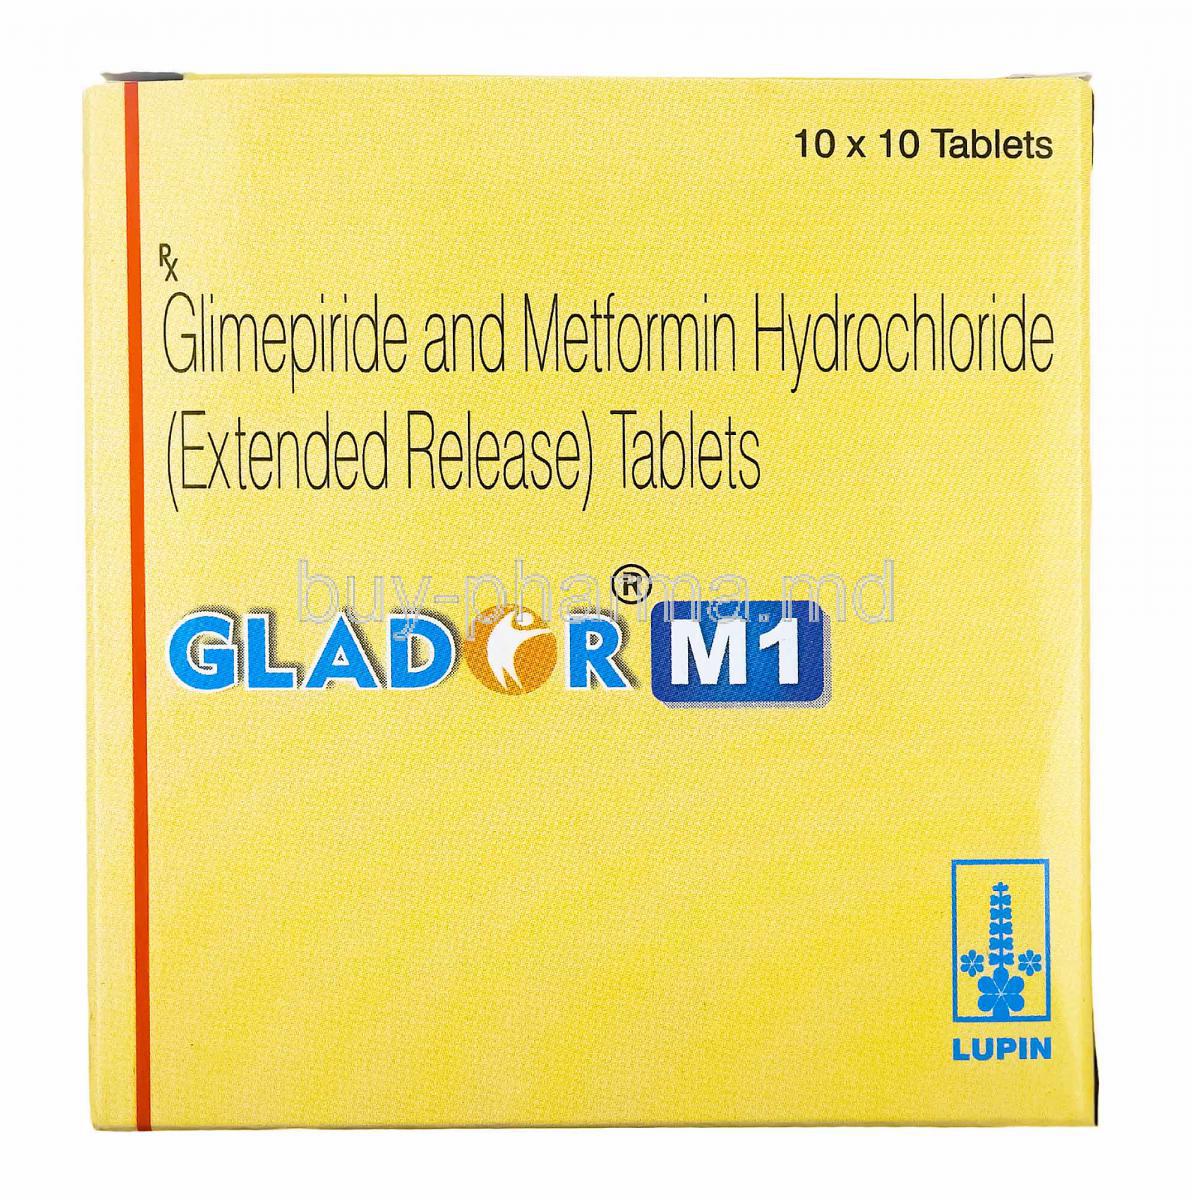 Glador M, Glimepiride and Metformin 1mg